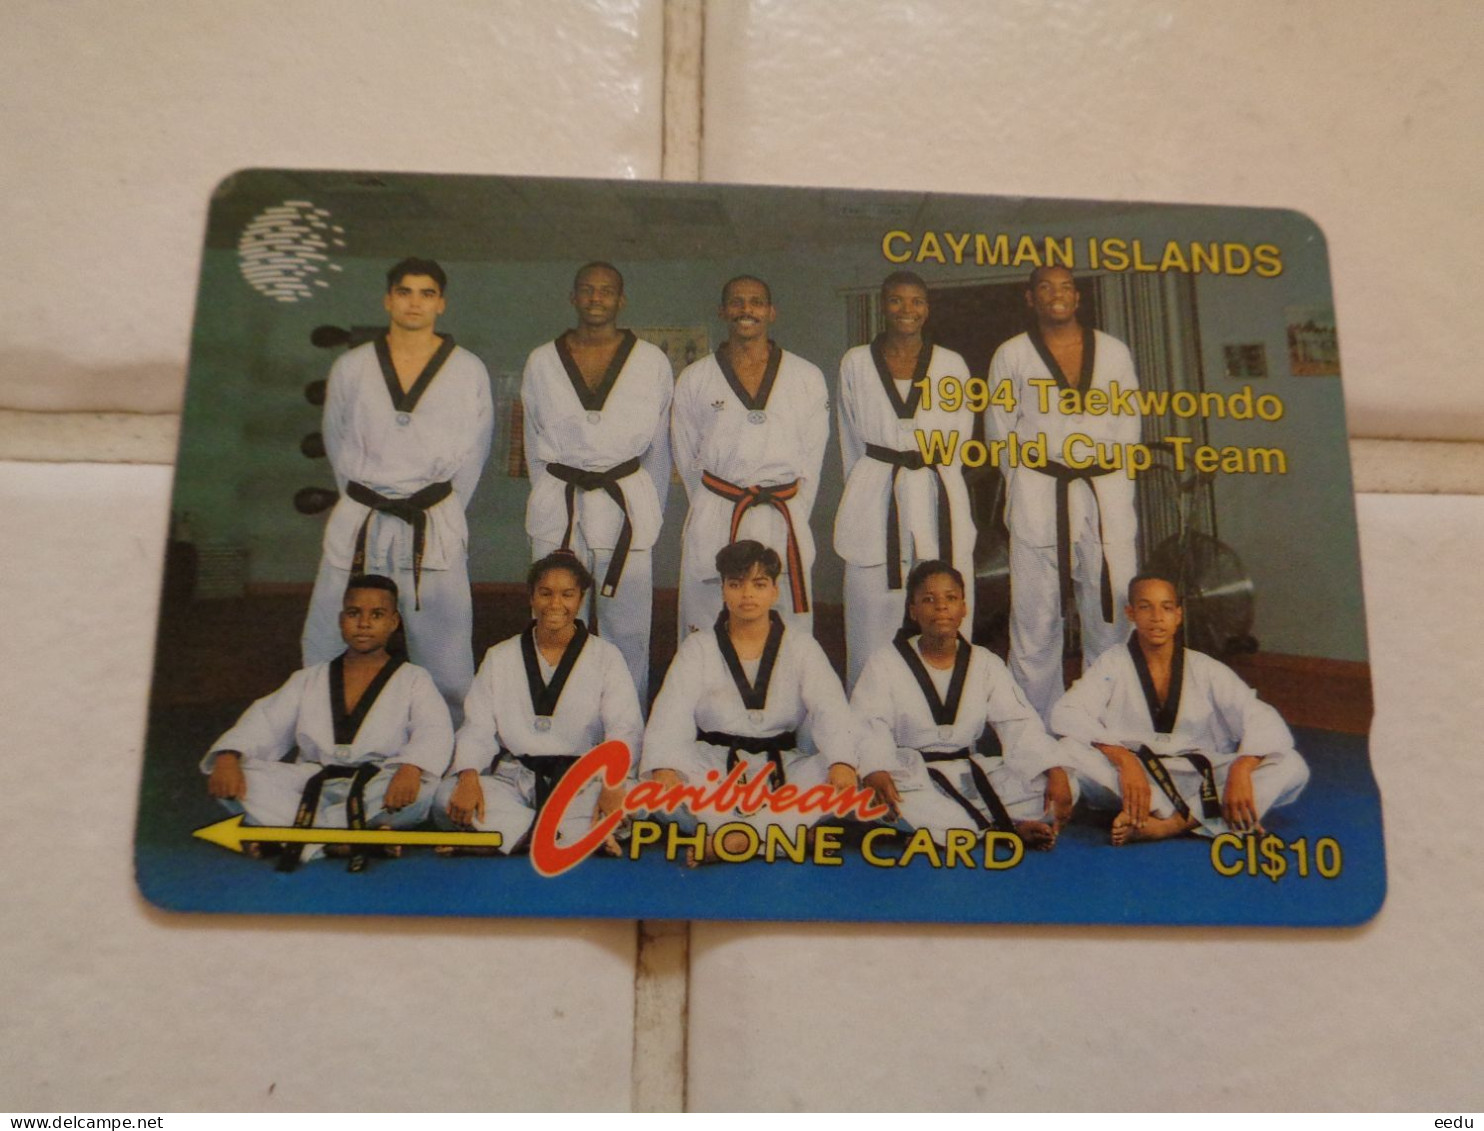 Cayman Islands Phonecard - Kaimaninseln (Cayman I.)